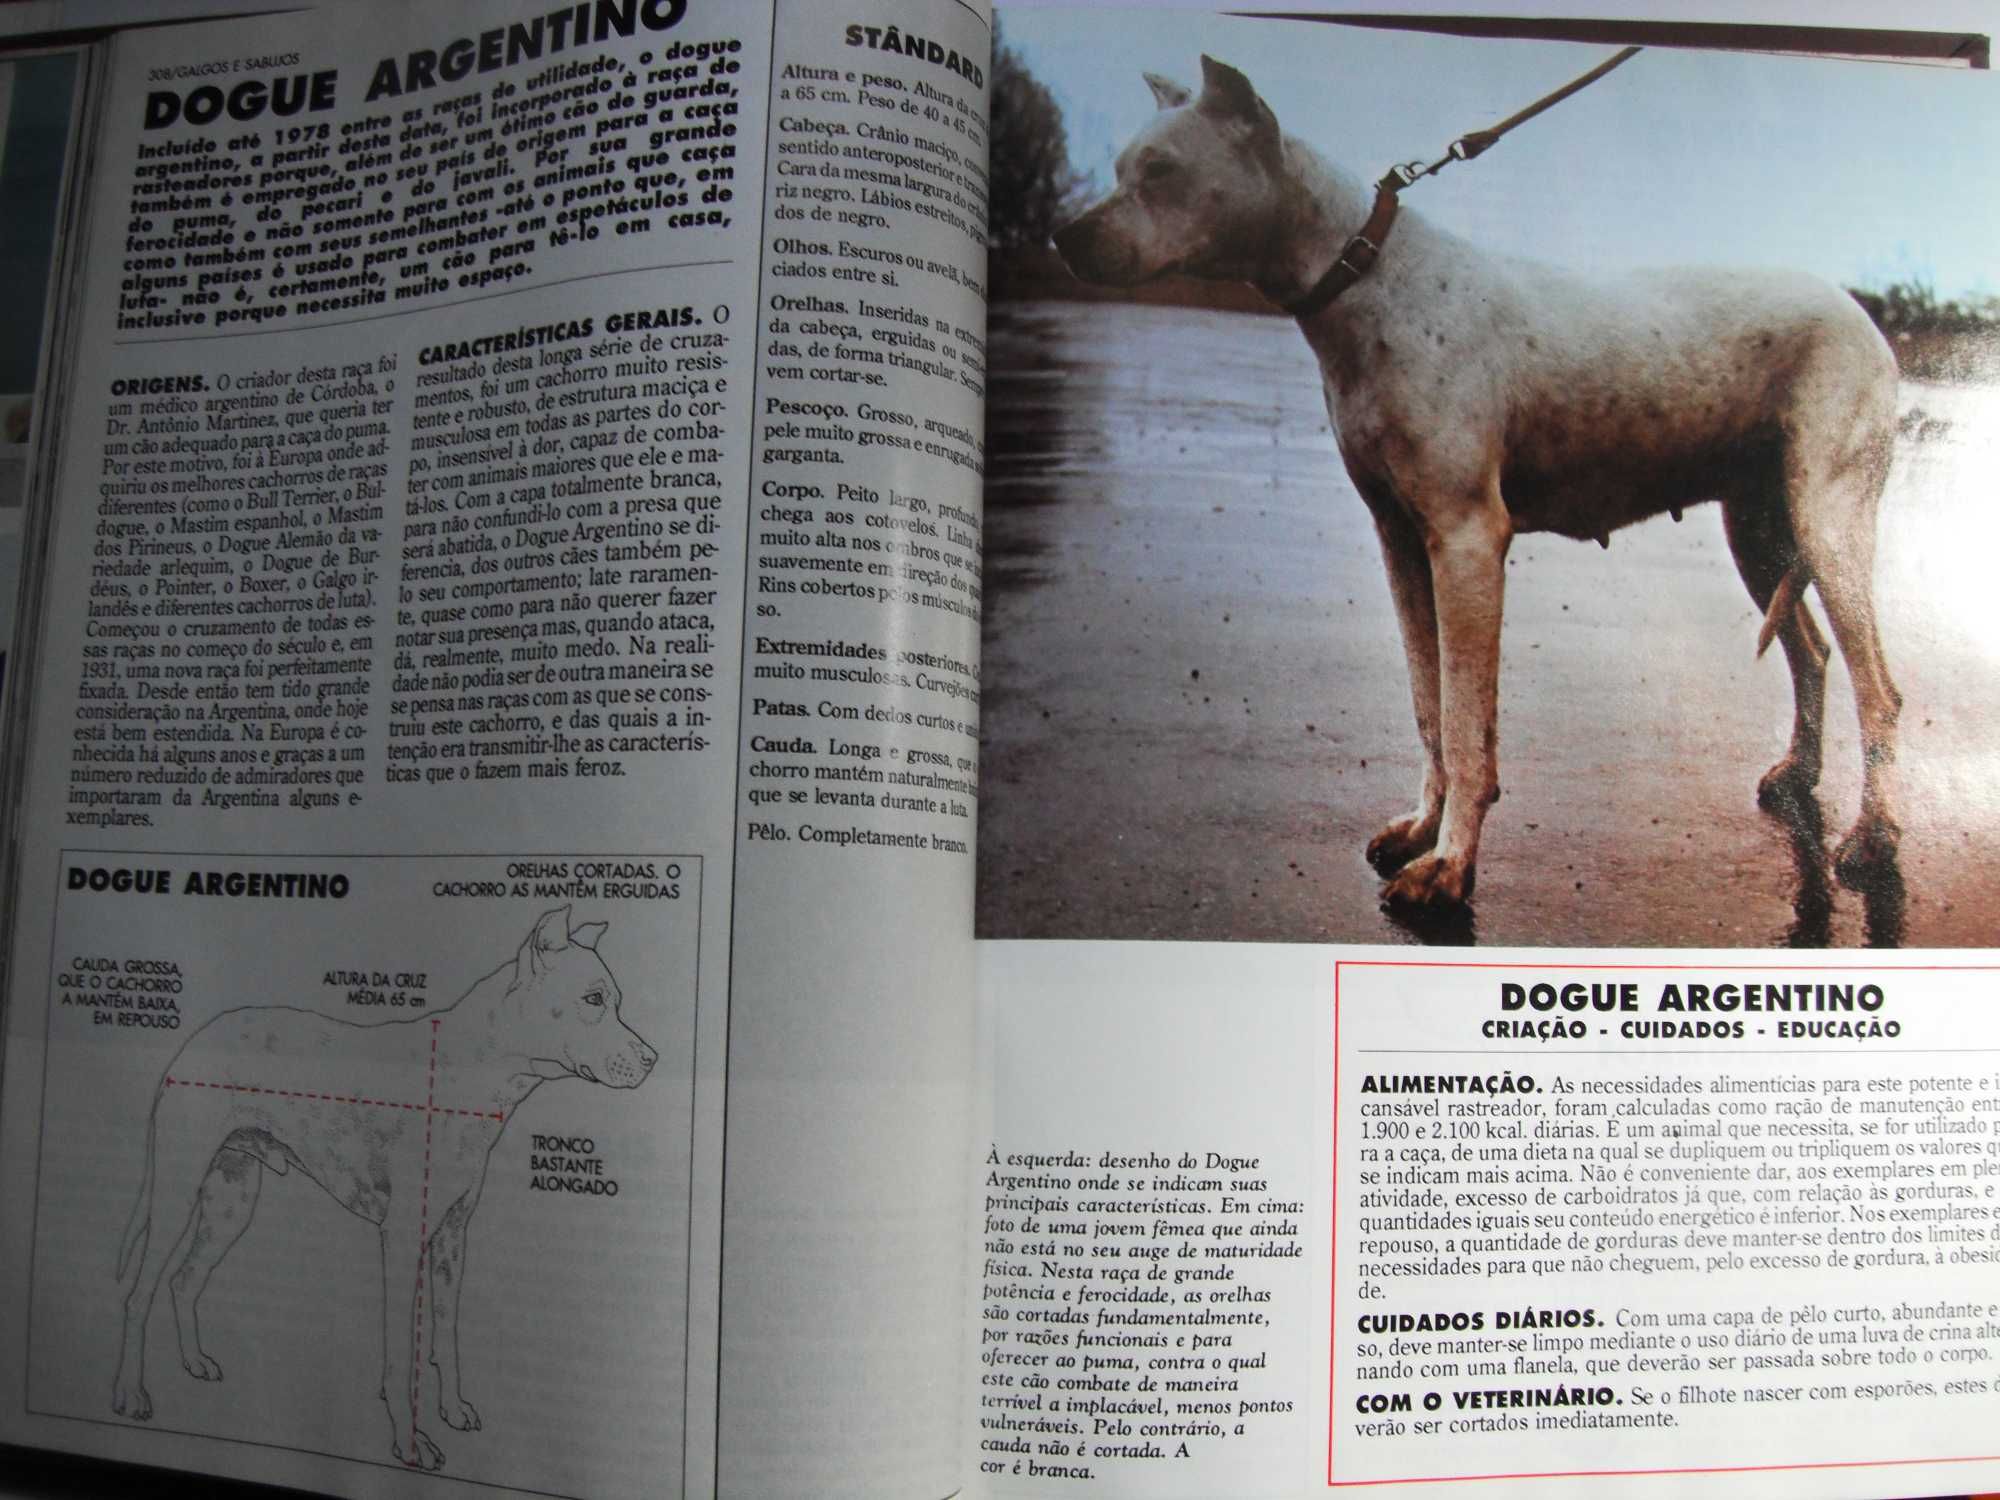 Enciclopédia dos Cães - Volumes 1 e 2 - Formato A4, capa dura